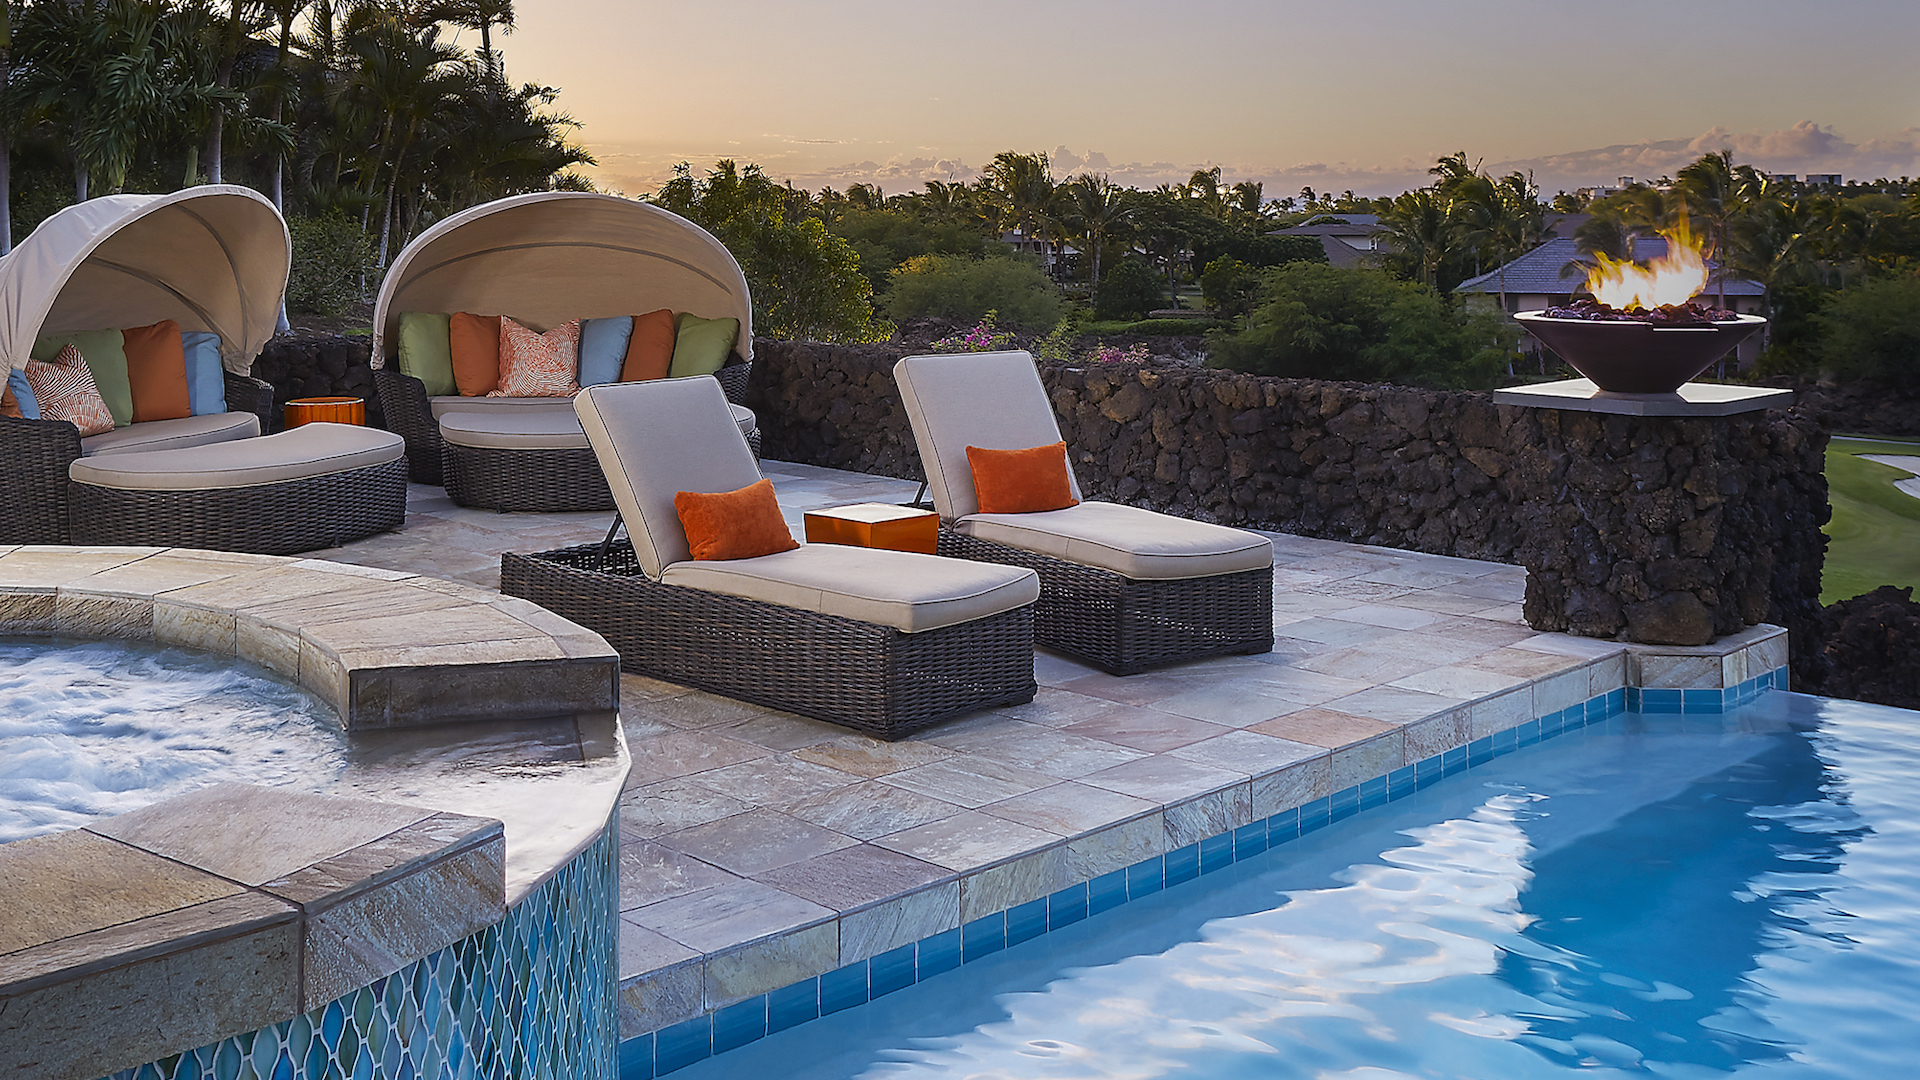 Kamuela Vacation Rentals, 4BD Champion Ridge (CR10) Estate Home at Mauna Lani Resort - Main lanai with private pool and spa, plus plentiful plush seating.